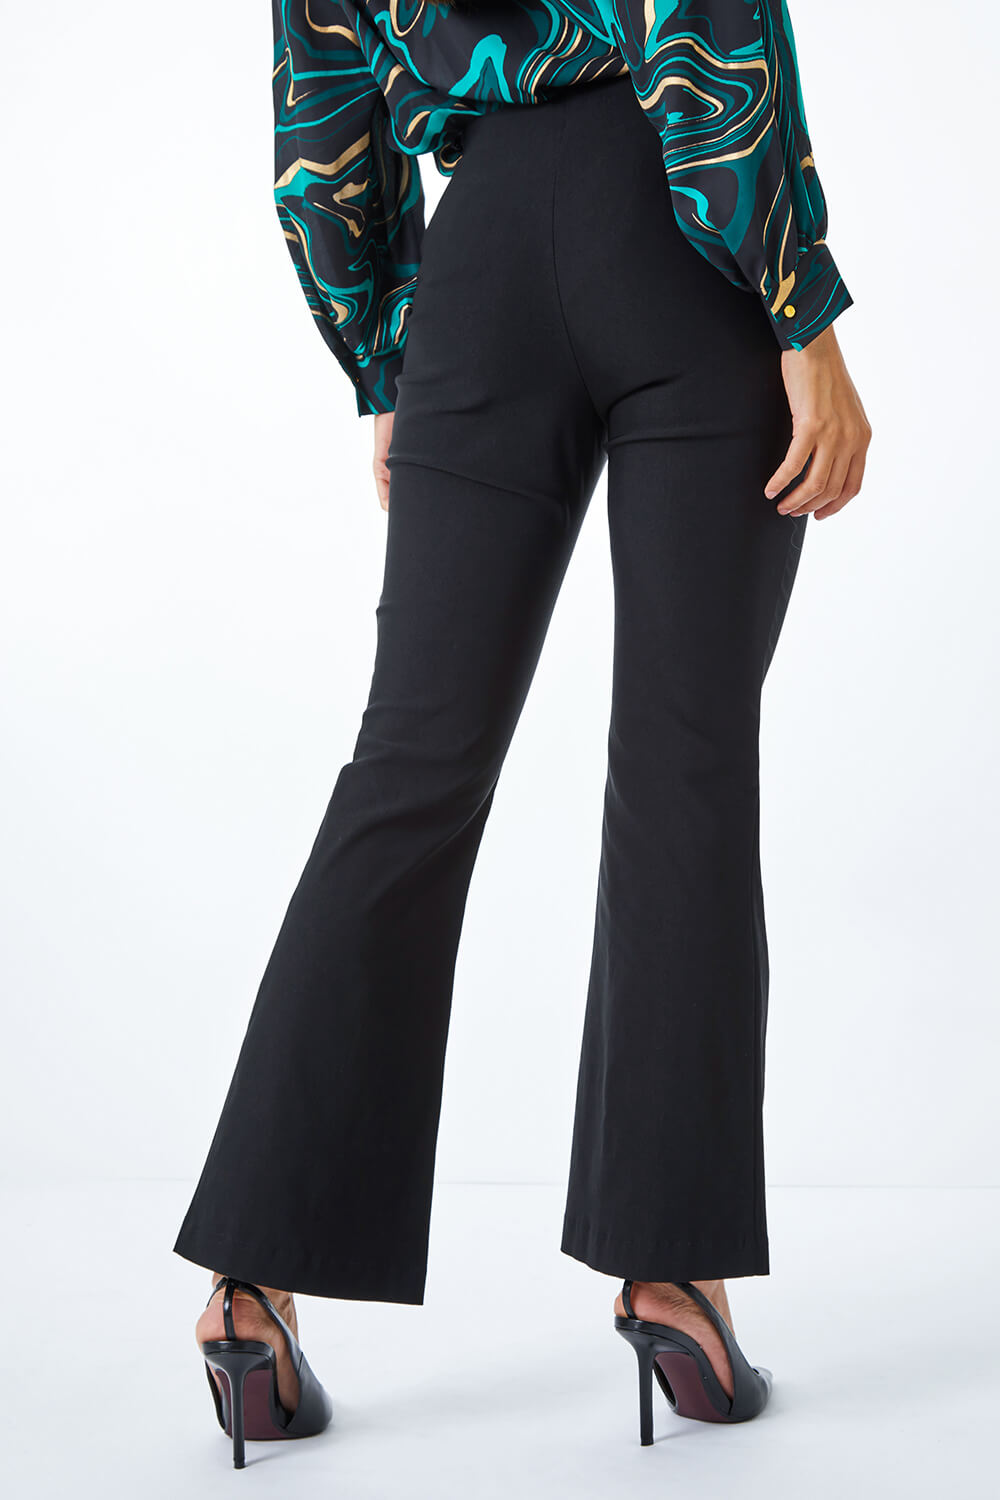 Buy Black Trousers & Pants for Women by Defacto Online | Ajio.com